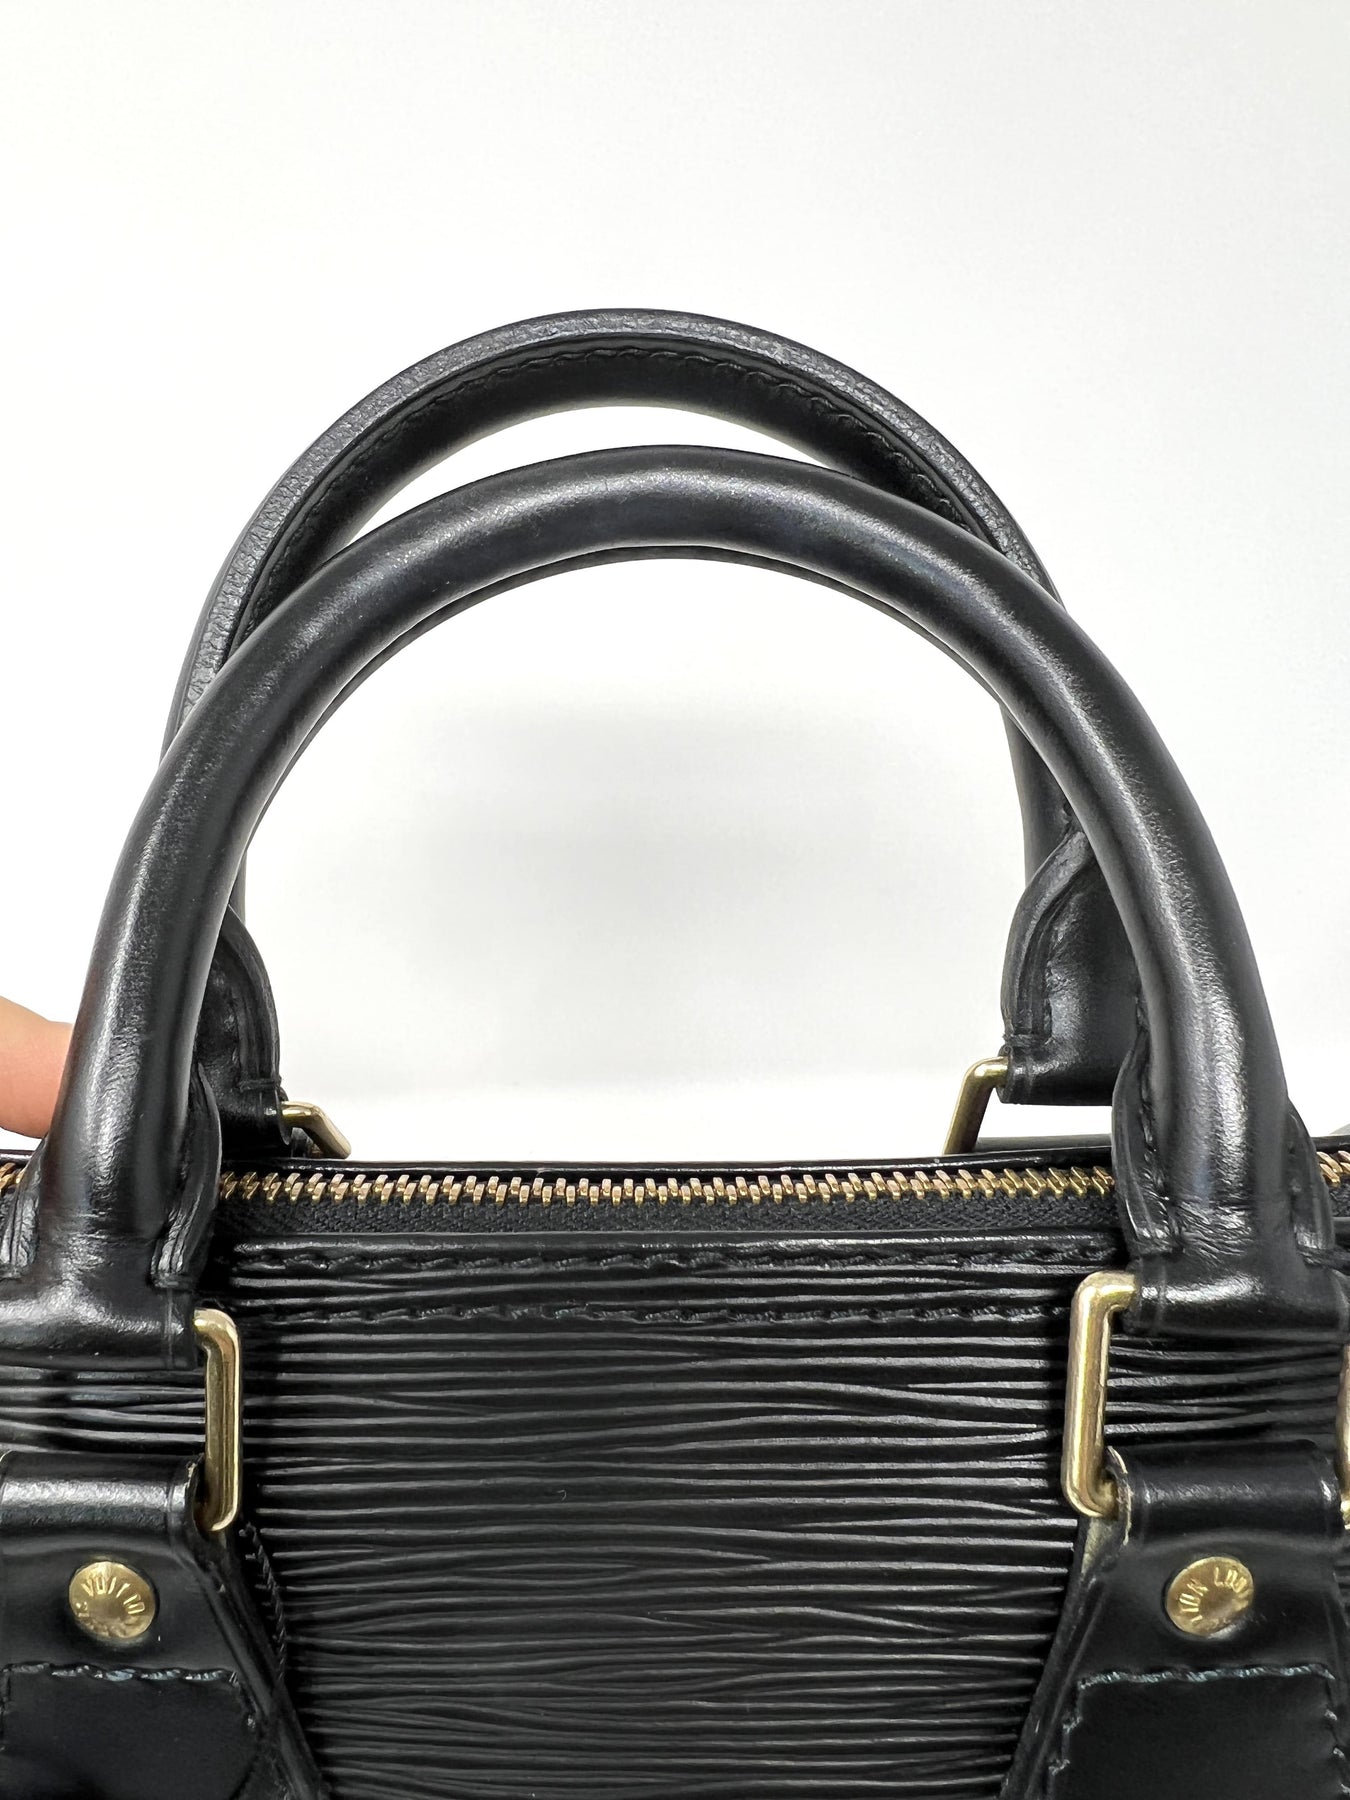 Louis Vuitton Speedy 25 in Grenade Epi Leather - Louis Vuitton